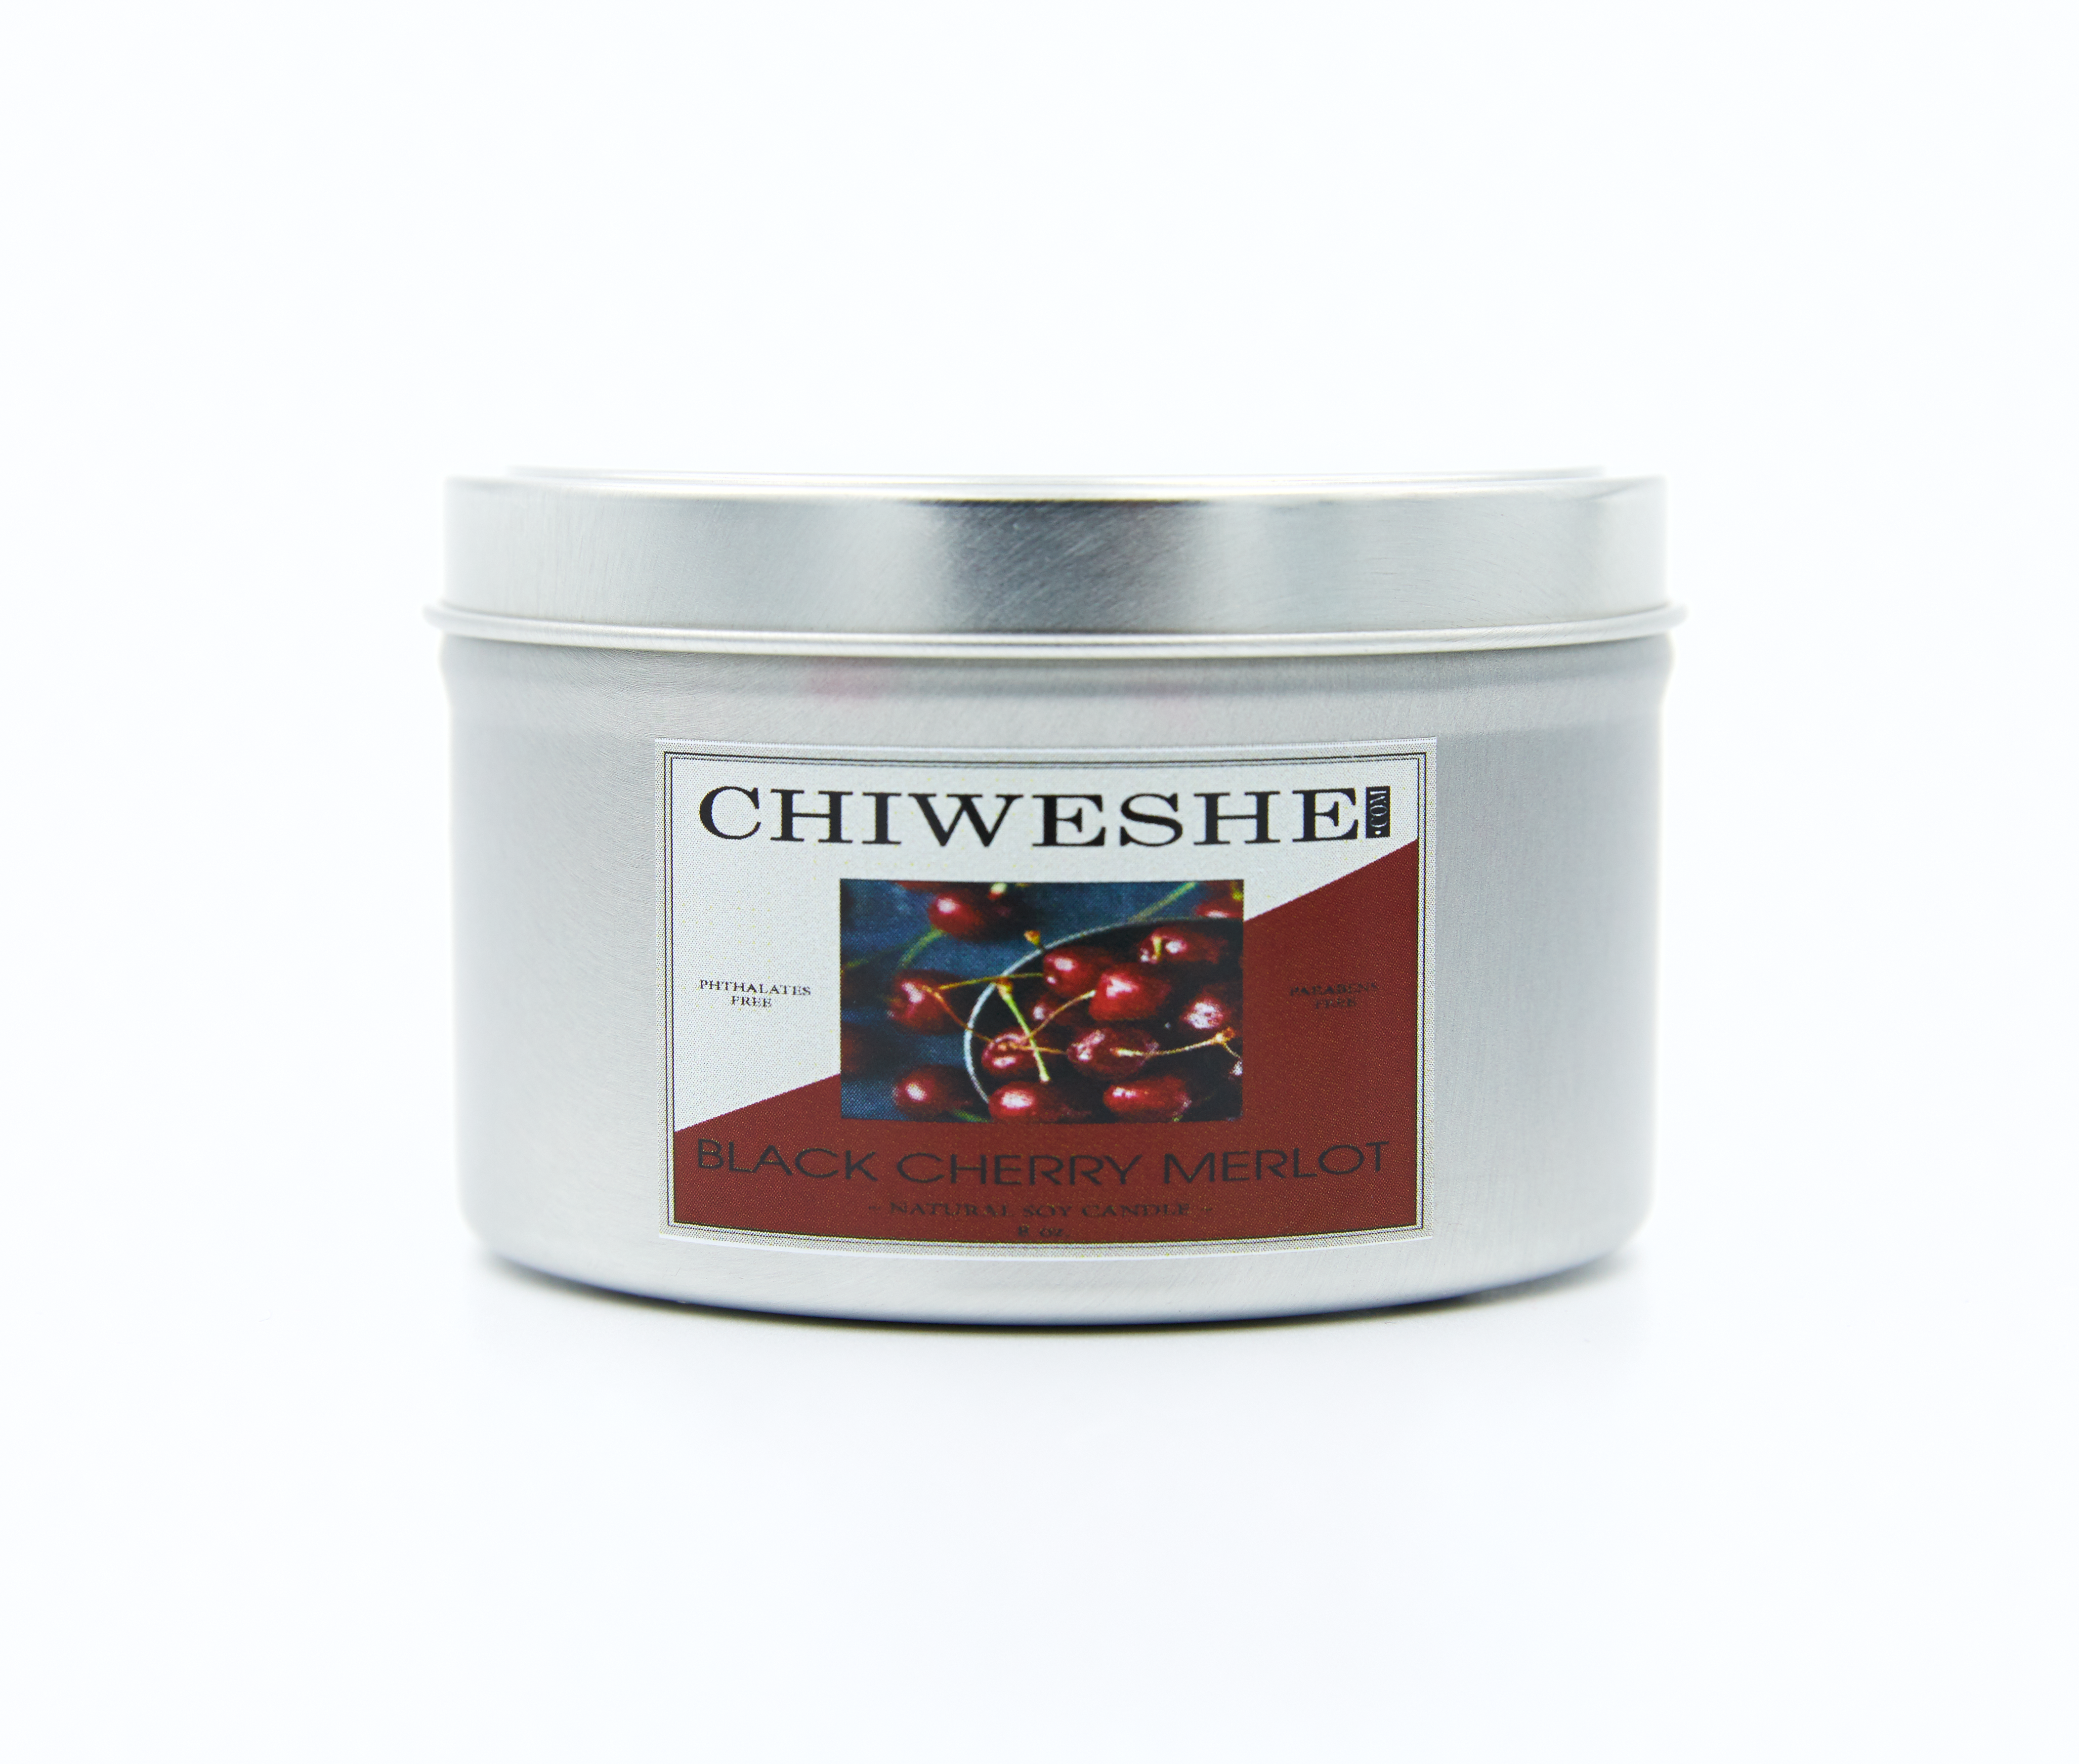 Black Cherry Merlot Natural Soy Candle Tin (8 oz.)